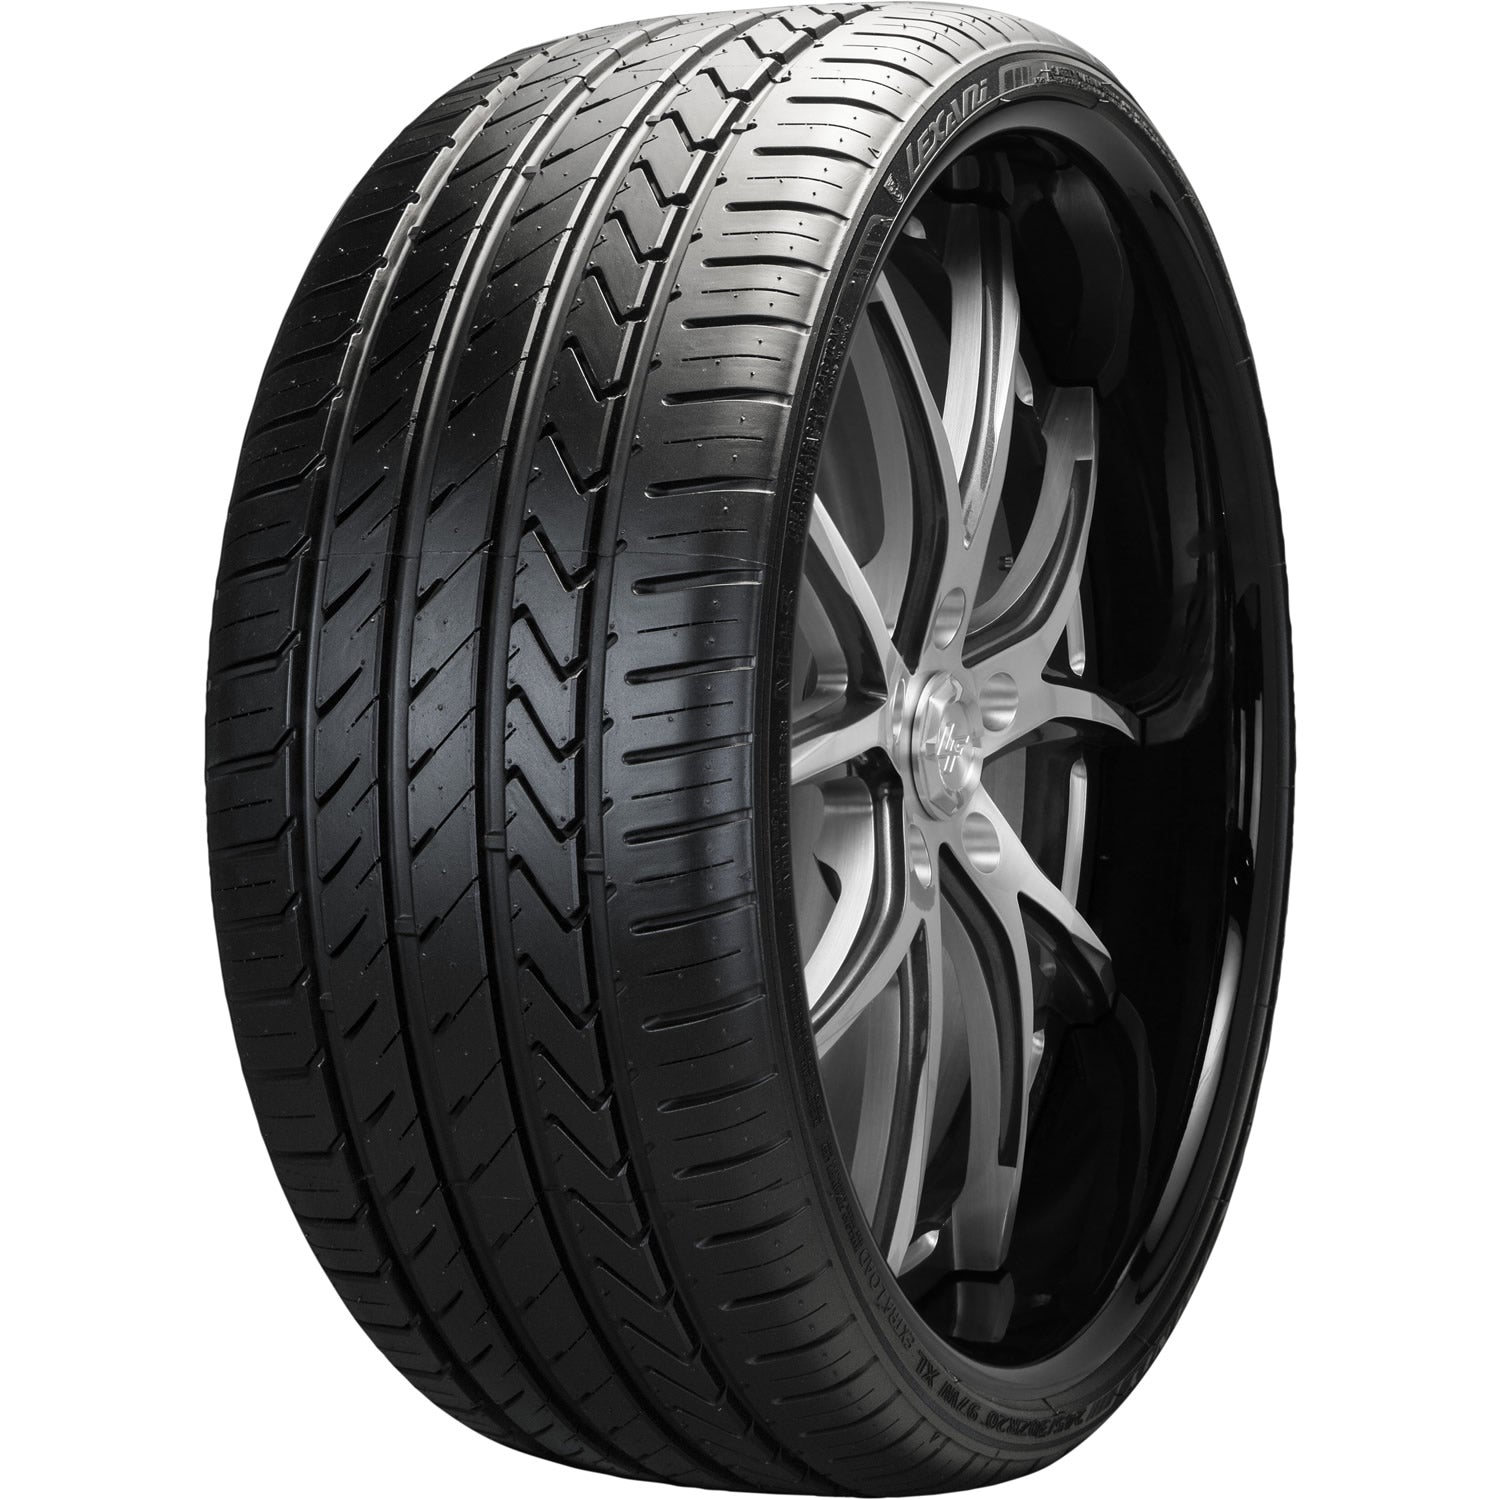 LEXANI LX-TWENTY 255/30ZR19 (25.1X10.2R 19) Tires